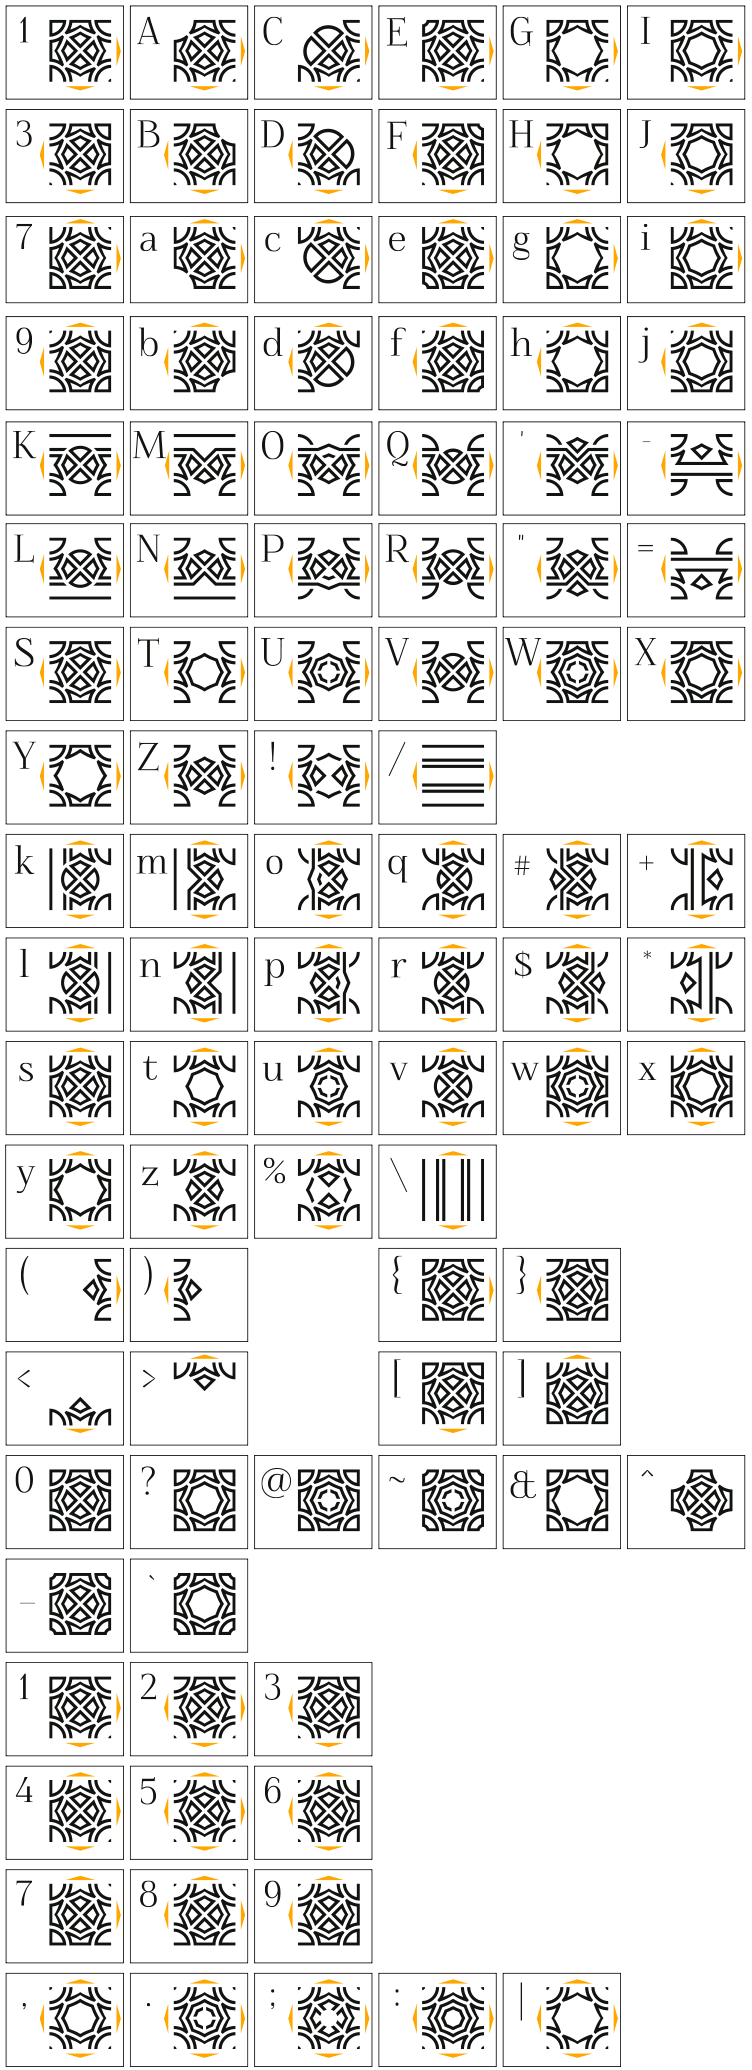 All glyphs in font Opattfram01